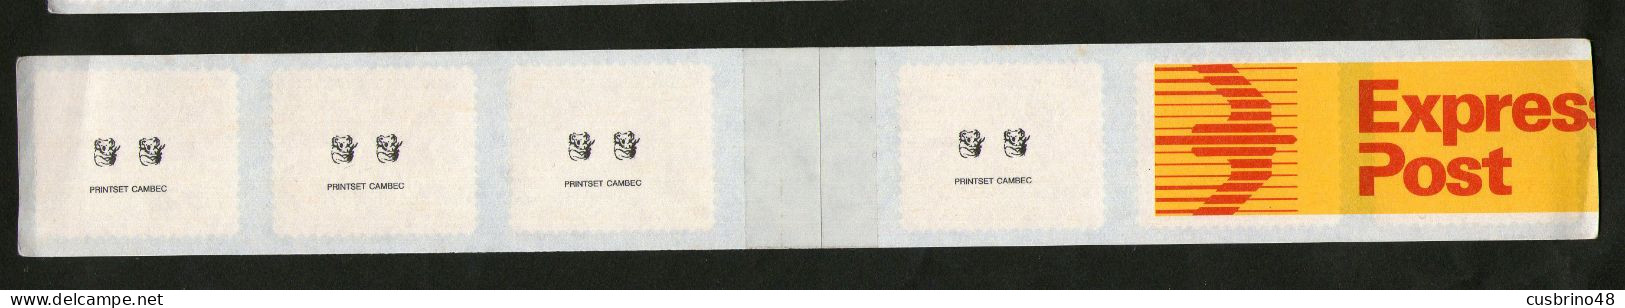 AUSTRALIA 1992 P&S Strip 6 45c Endangered Species PRINTSET 2 Koala - Express Post + Joined Strips. Lot AUS 279 - Mint Stamps